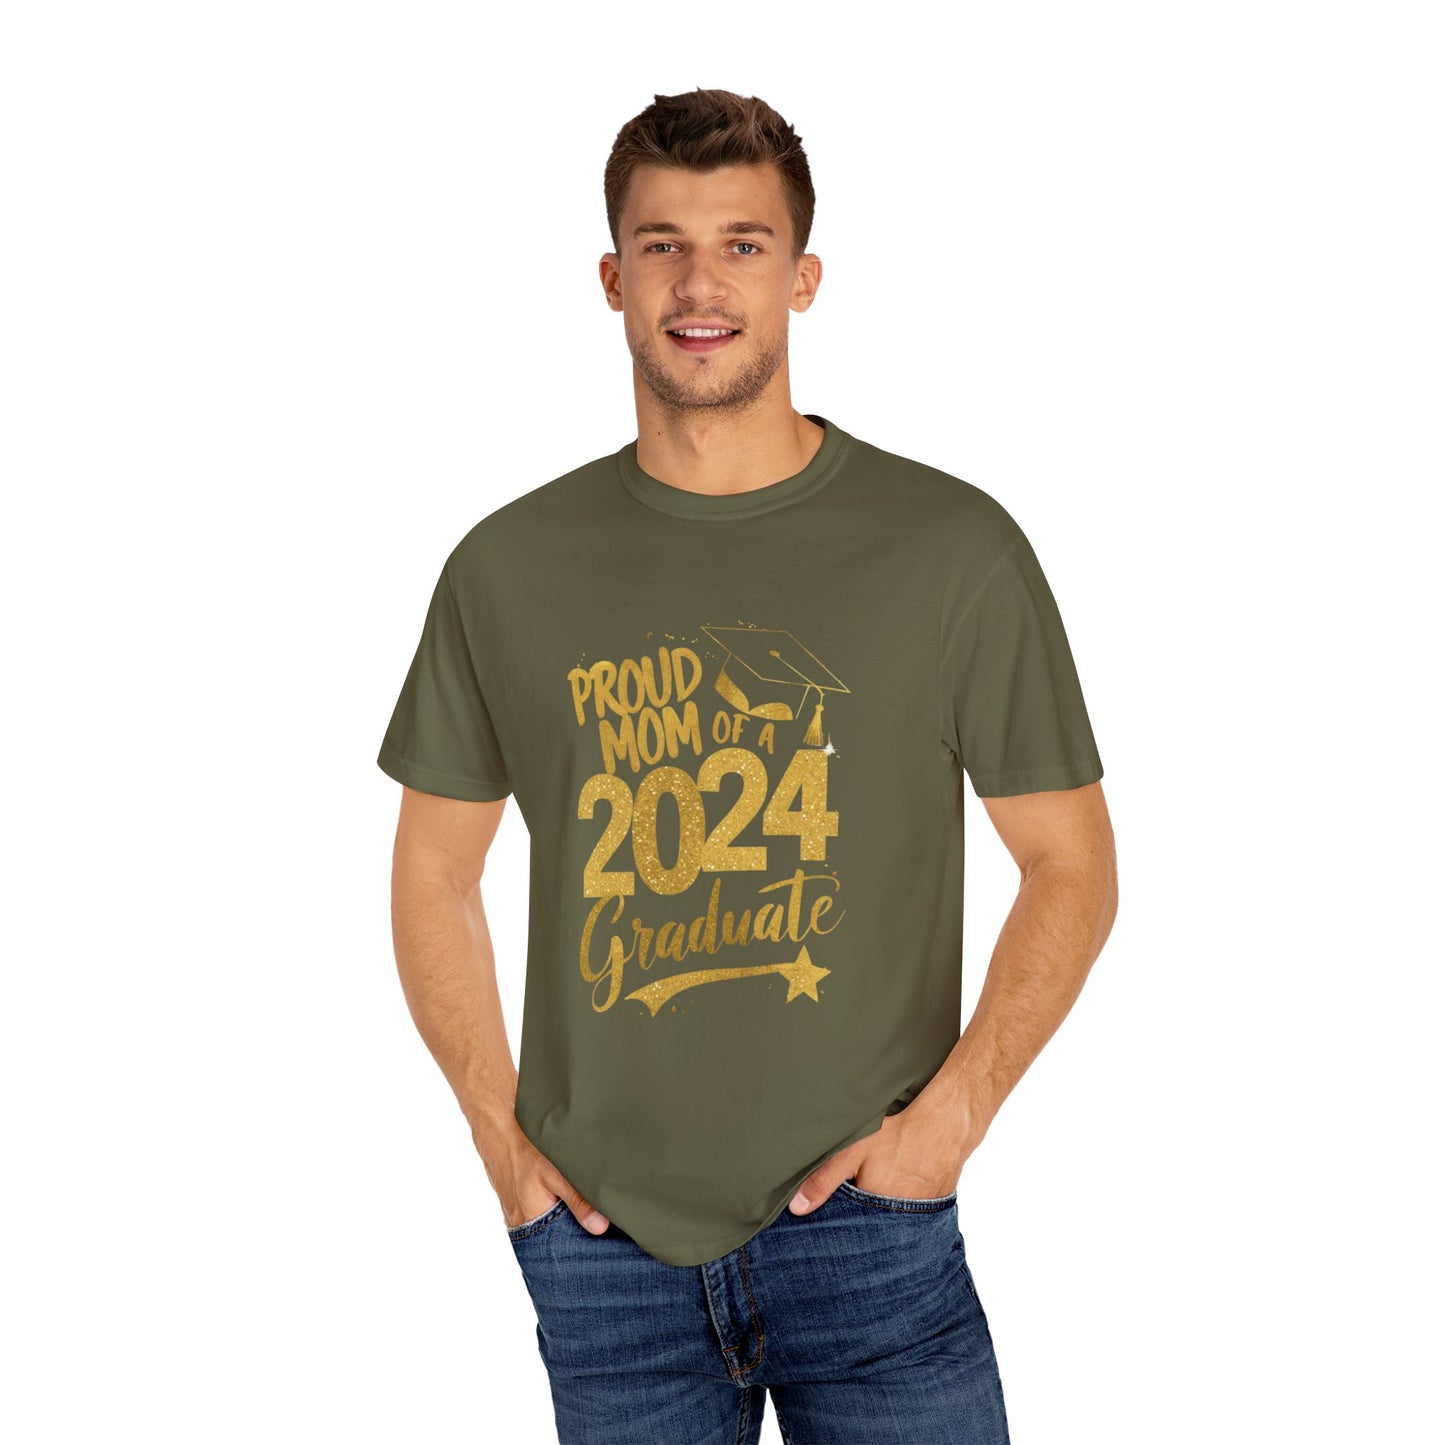 Proud of Mom 2024 Graduate Unisex Garment-dyed T-shirt Cotton Funny Humorous Graphic Soft Premium Unisex Men Women Sage T-shirt Birthday Gift-54